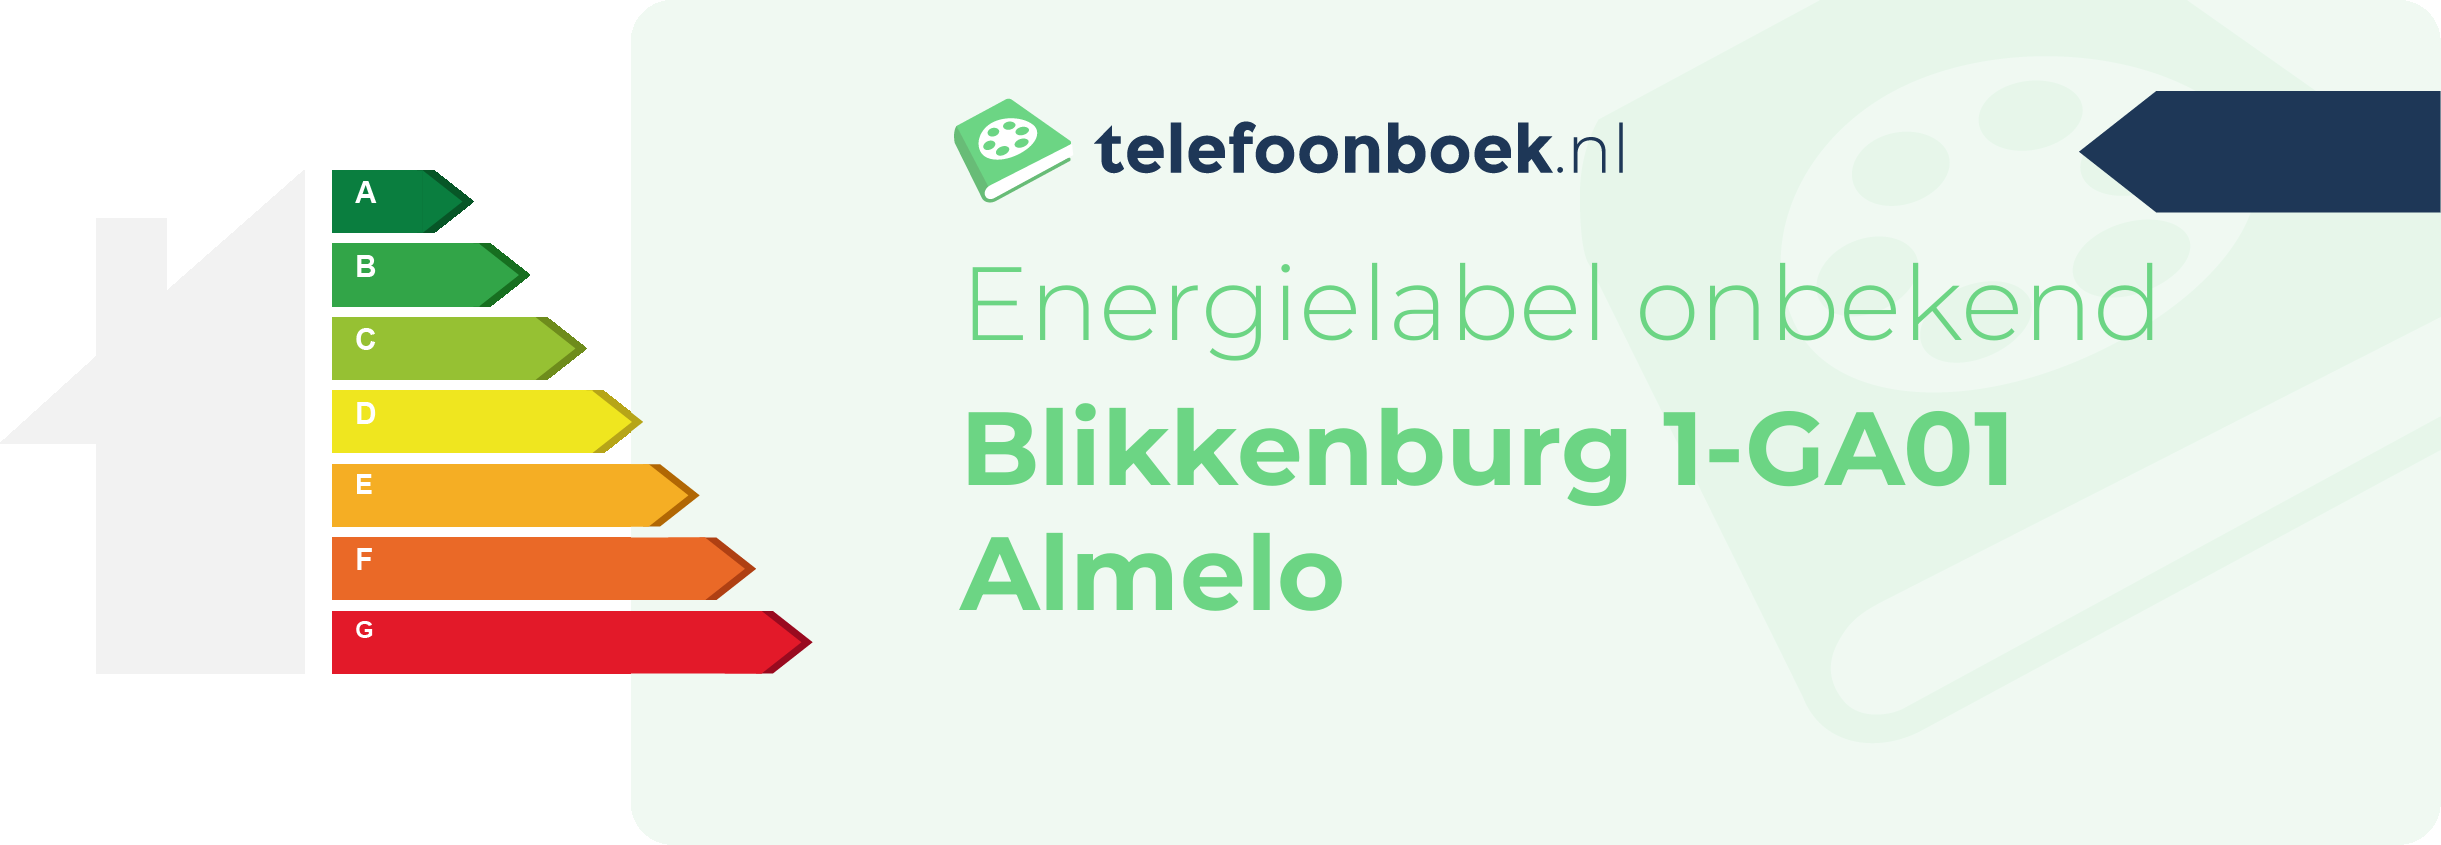 Energielabel Blikkenburg 1-GA01 Almelo